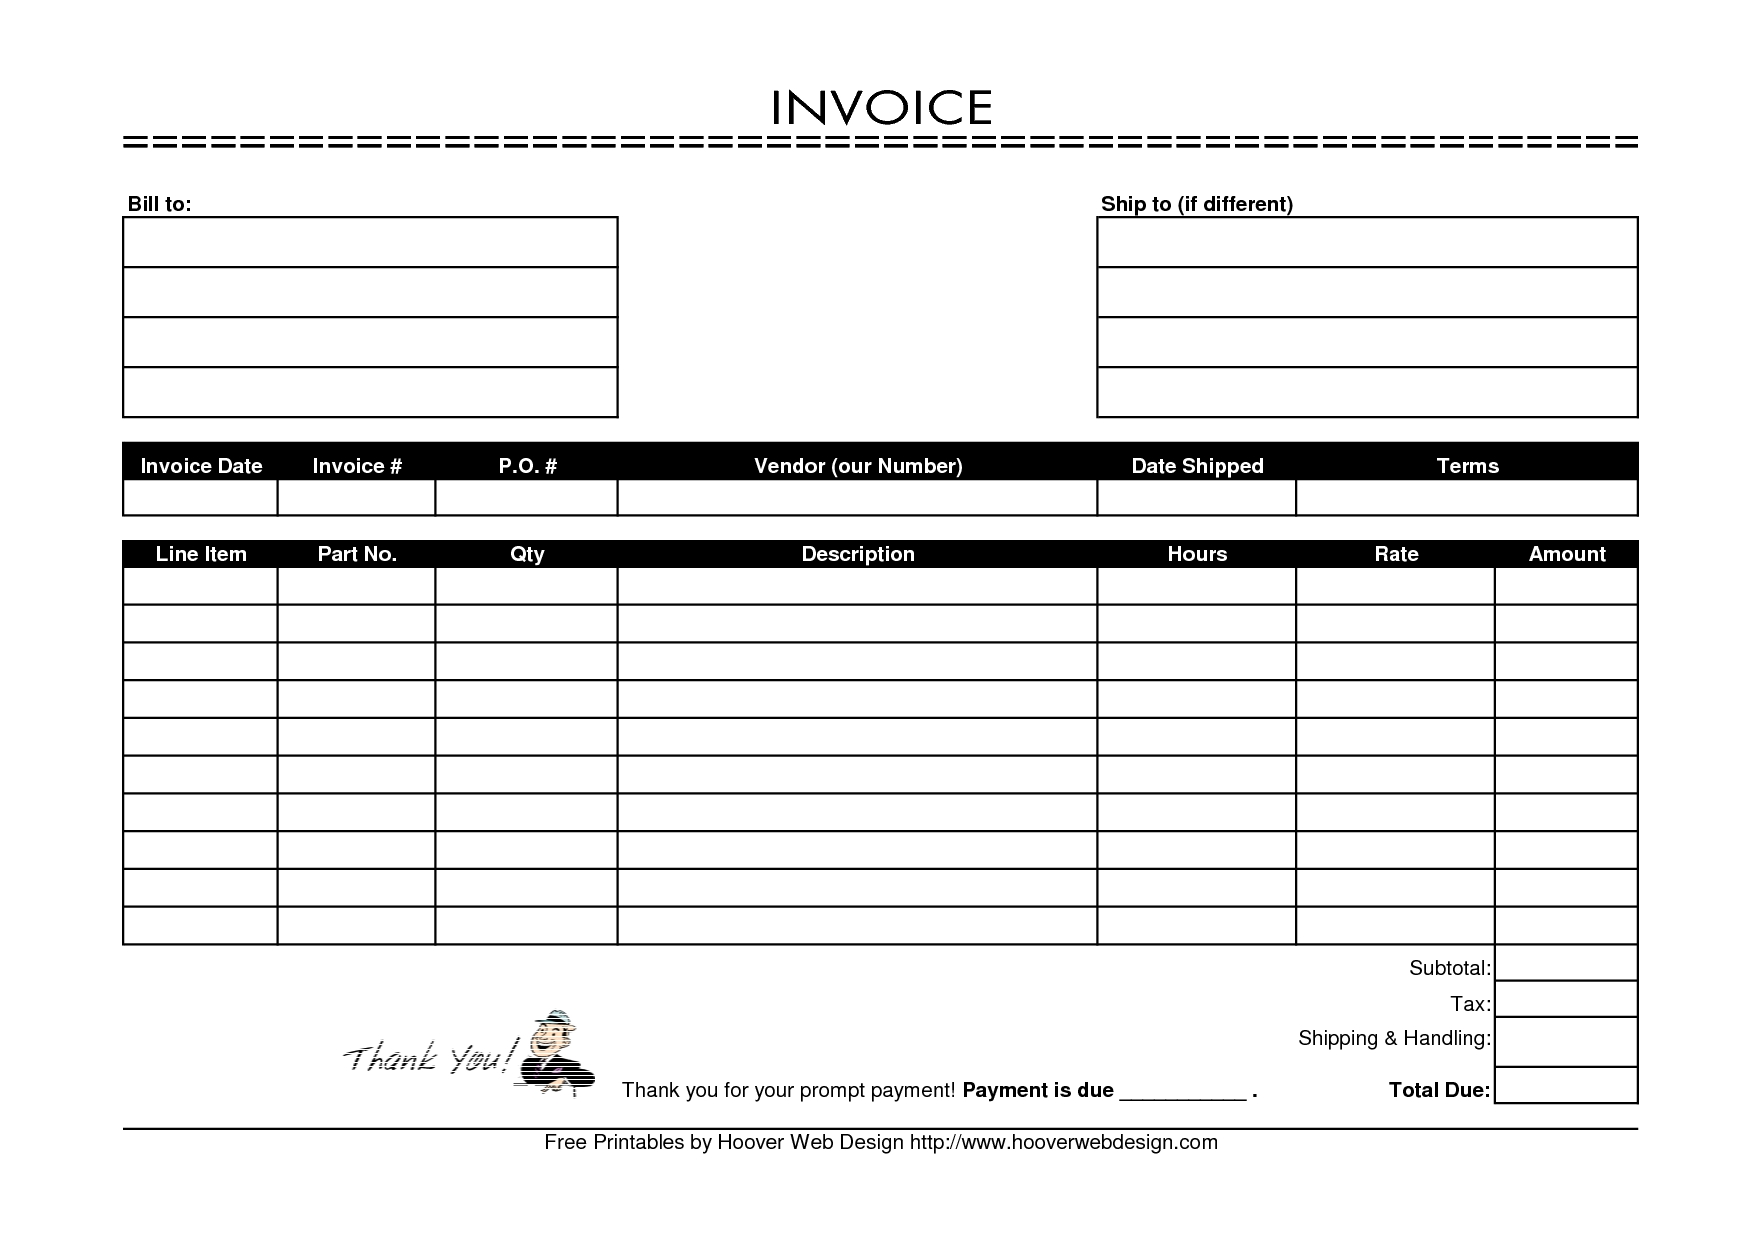 free printable invoice free to do list printable blank invoices